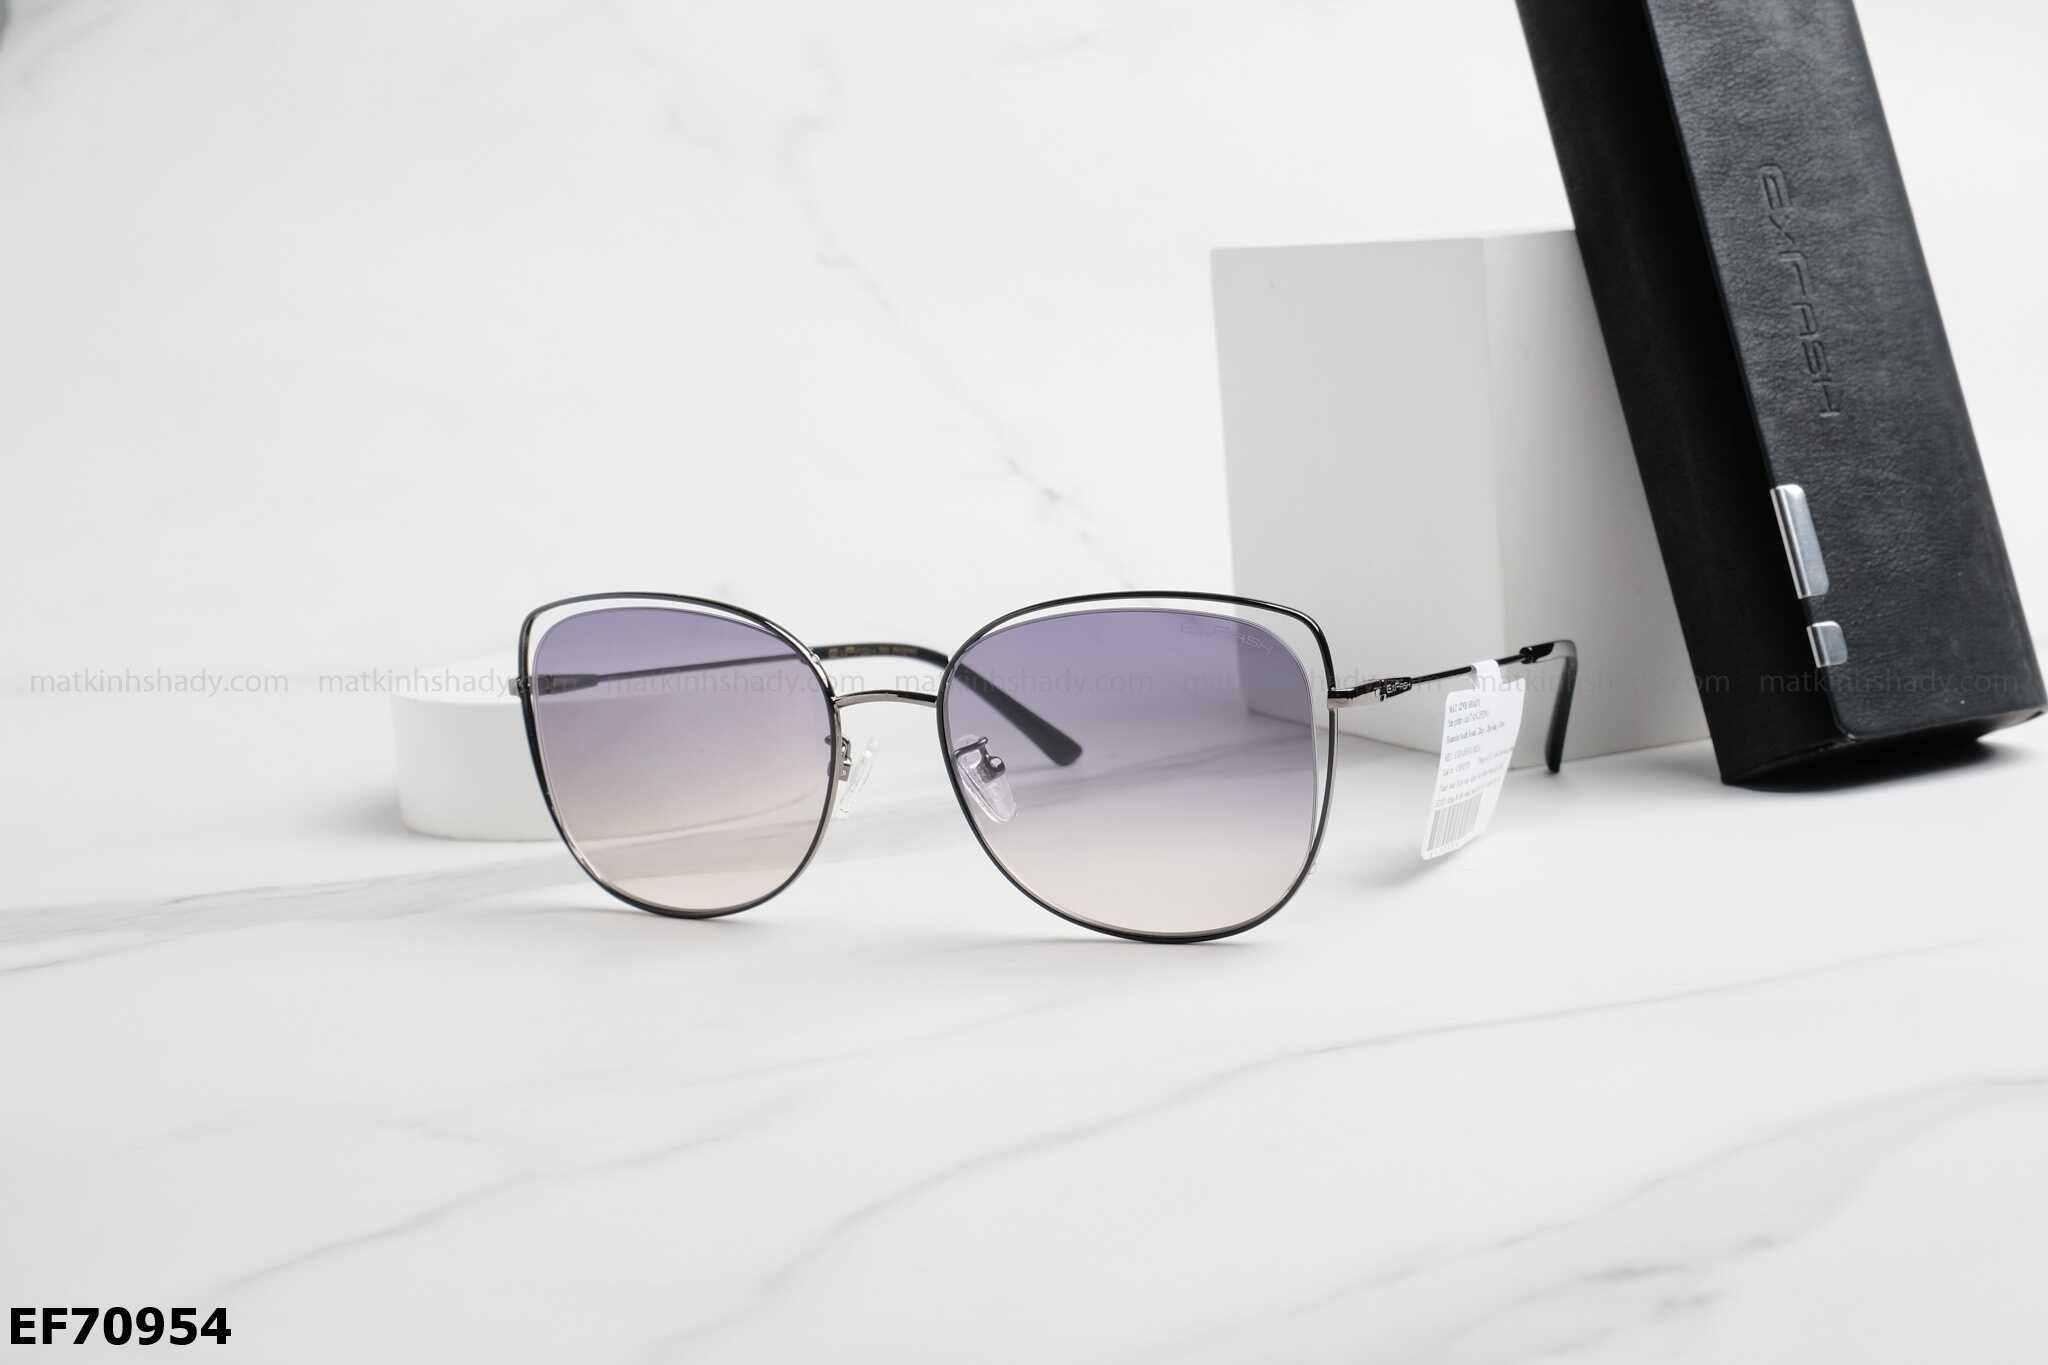  Exfash Eyewear - Sunglasses - EF70954 